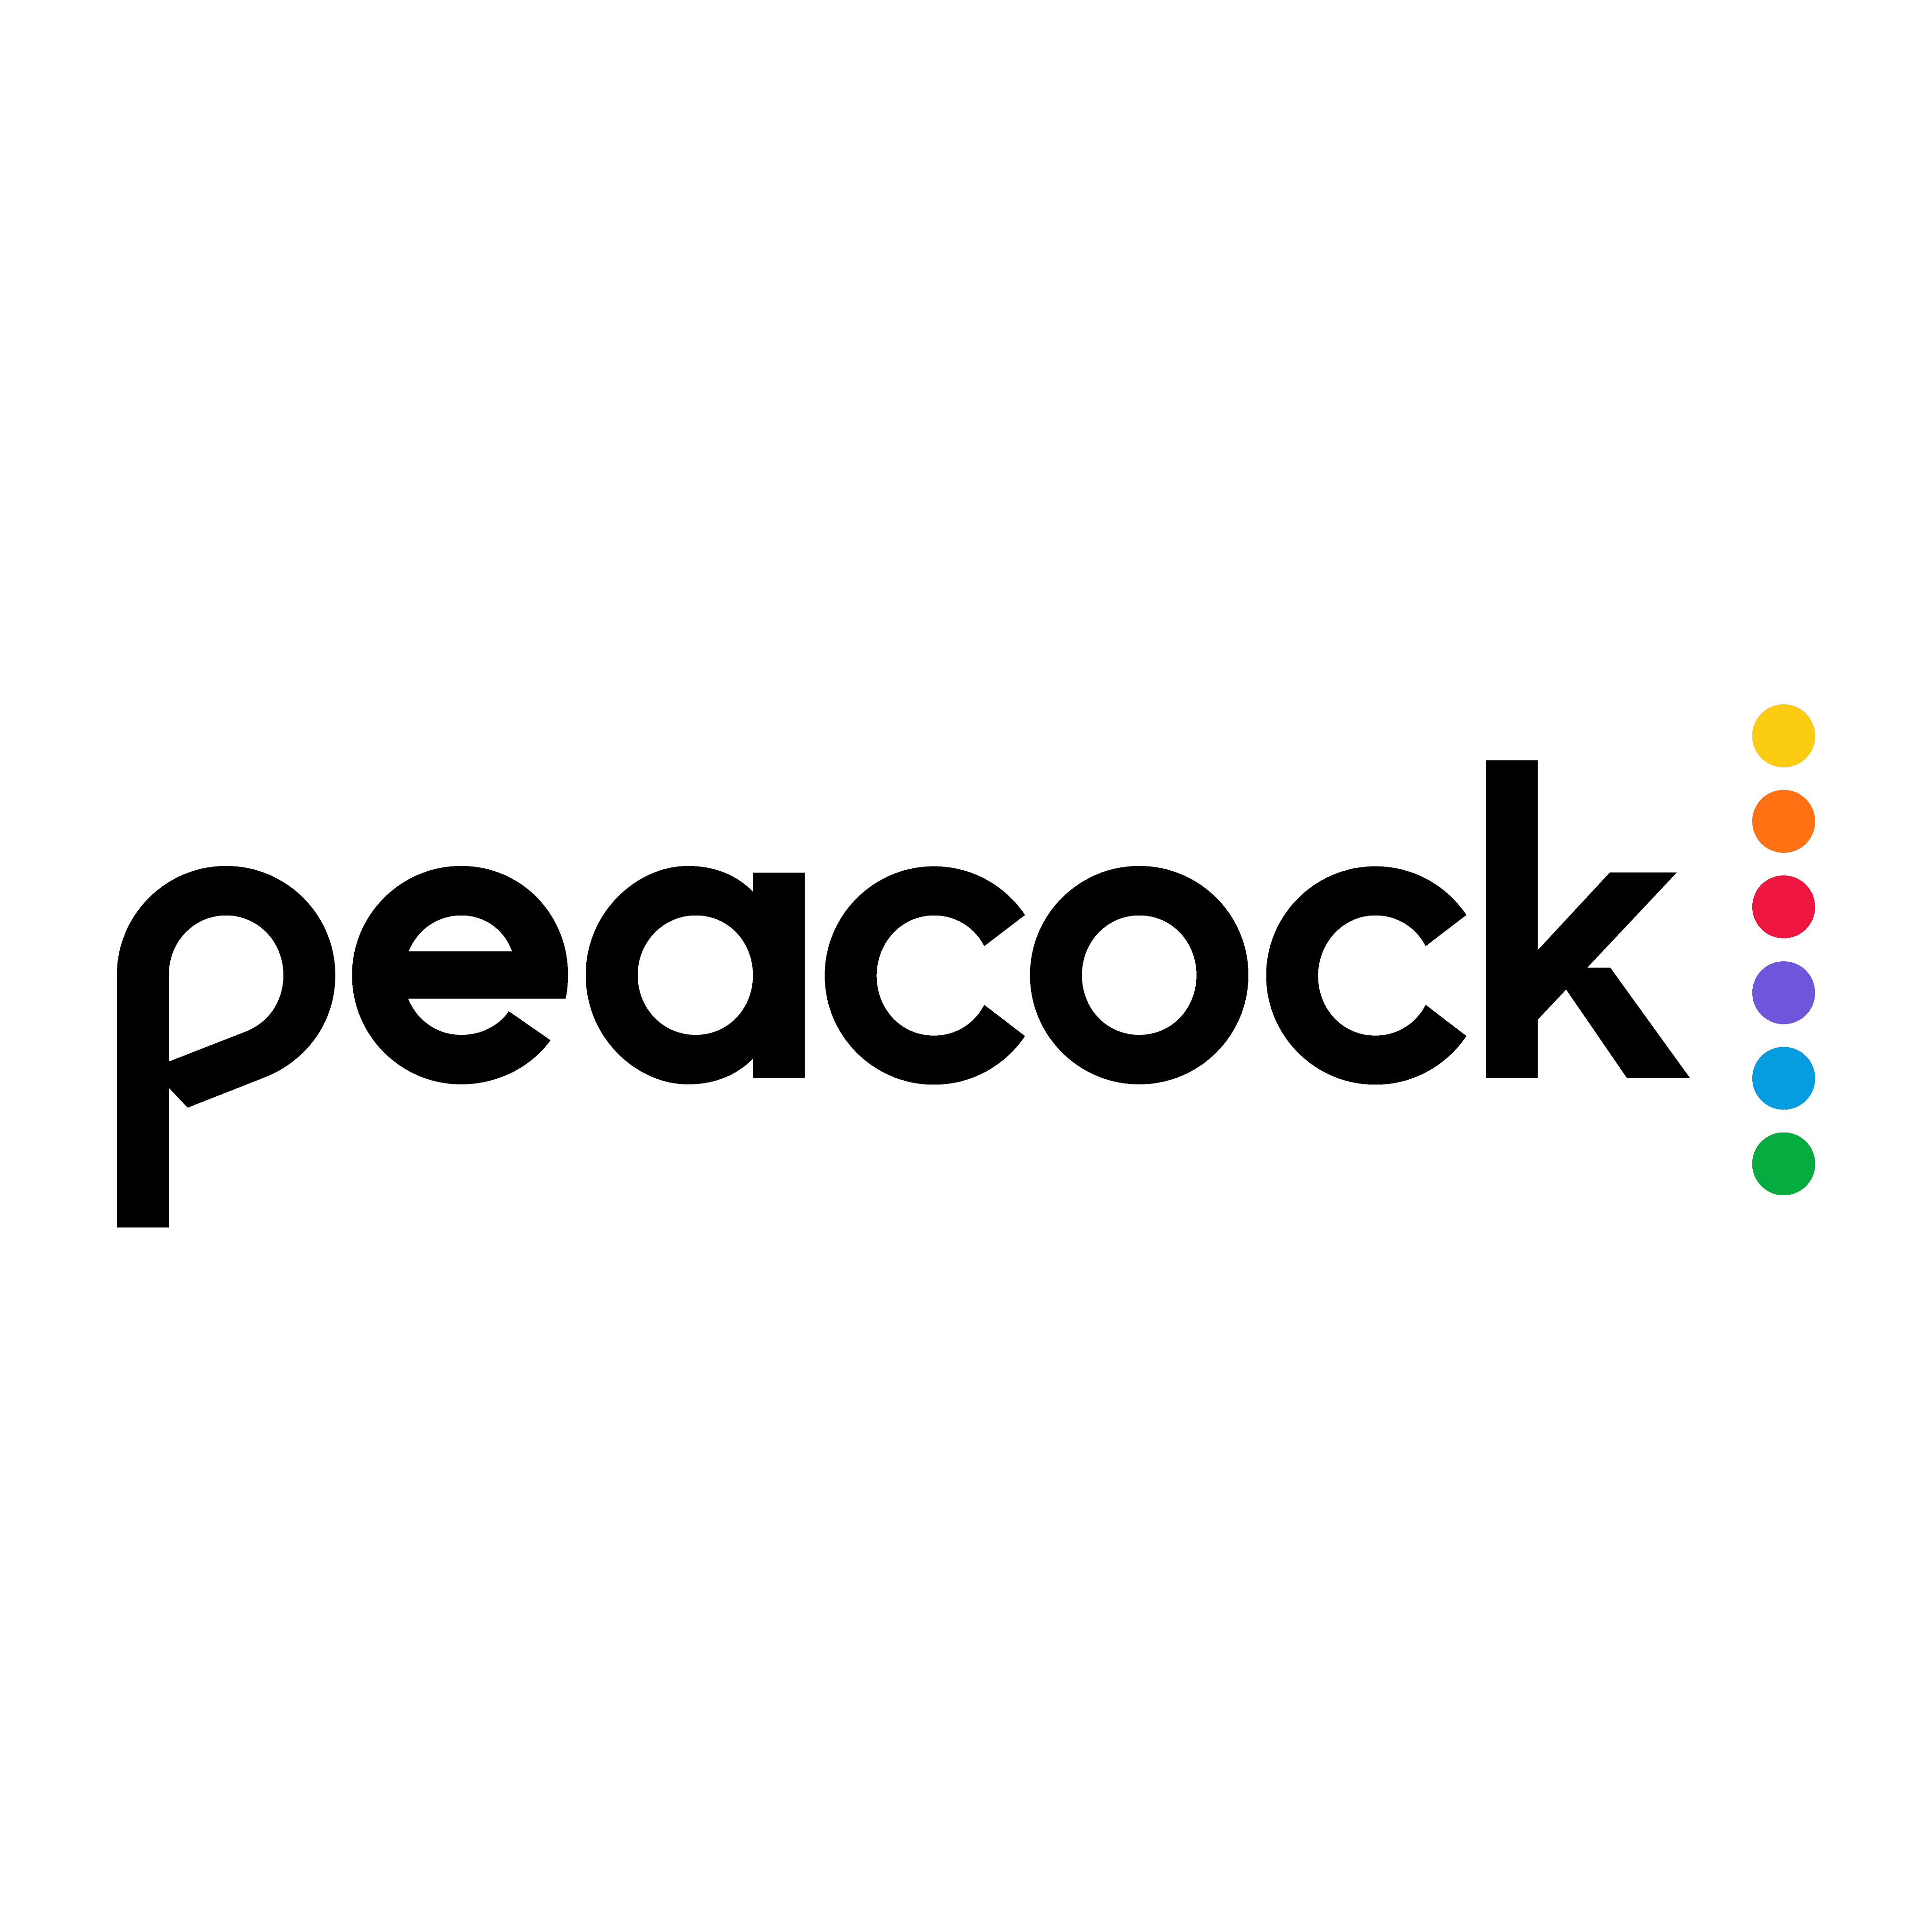 svg peacock